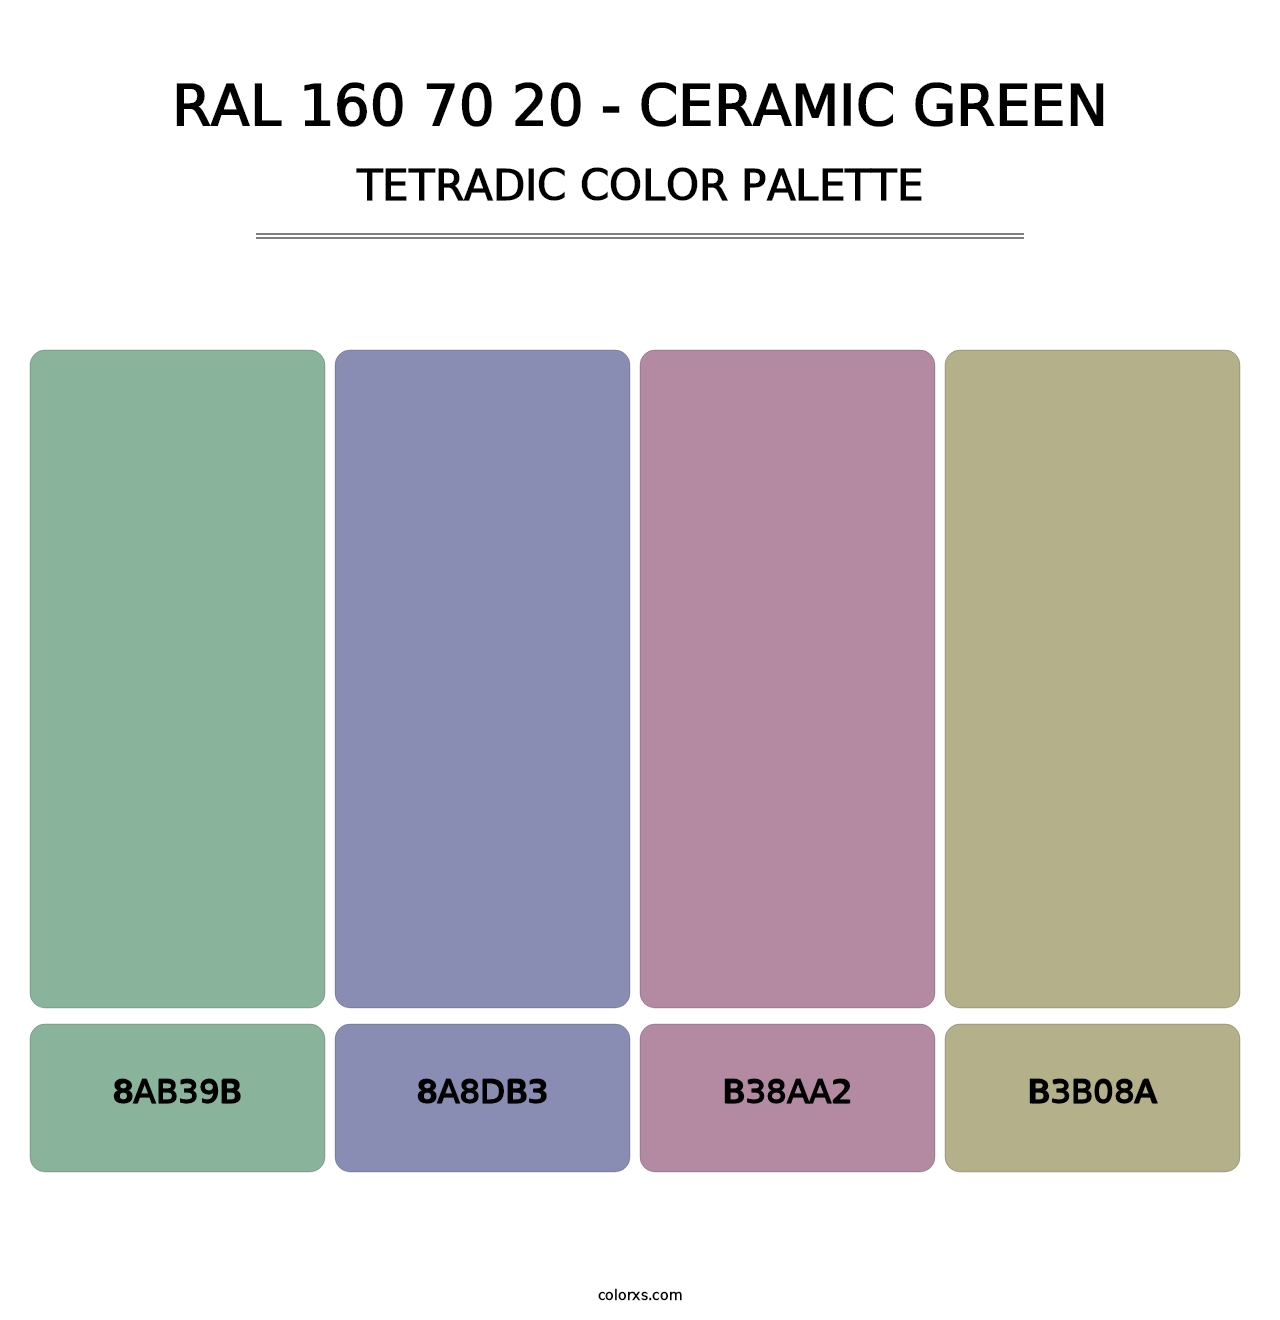 RAL 160 70 20 - Ceramic Green - Tetradic Color Palette